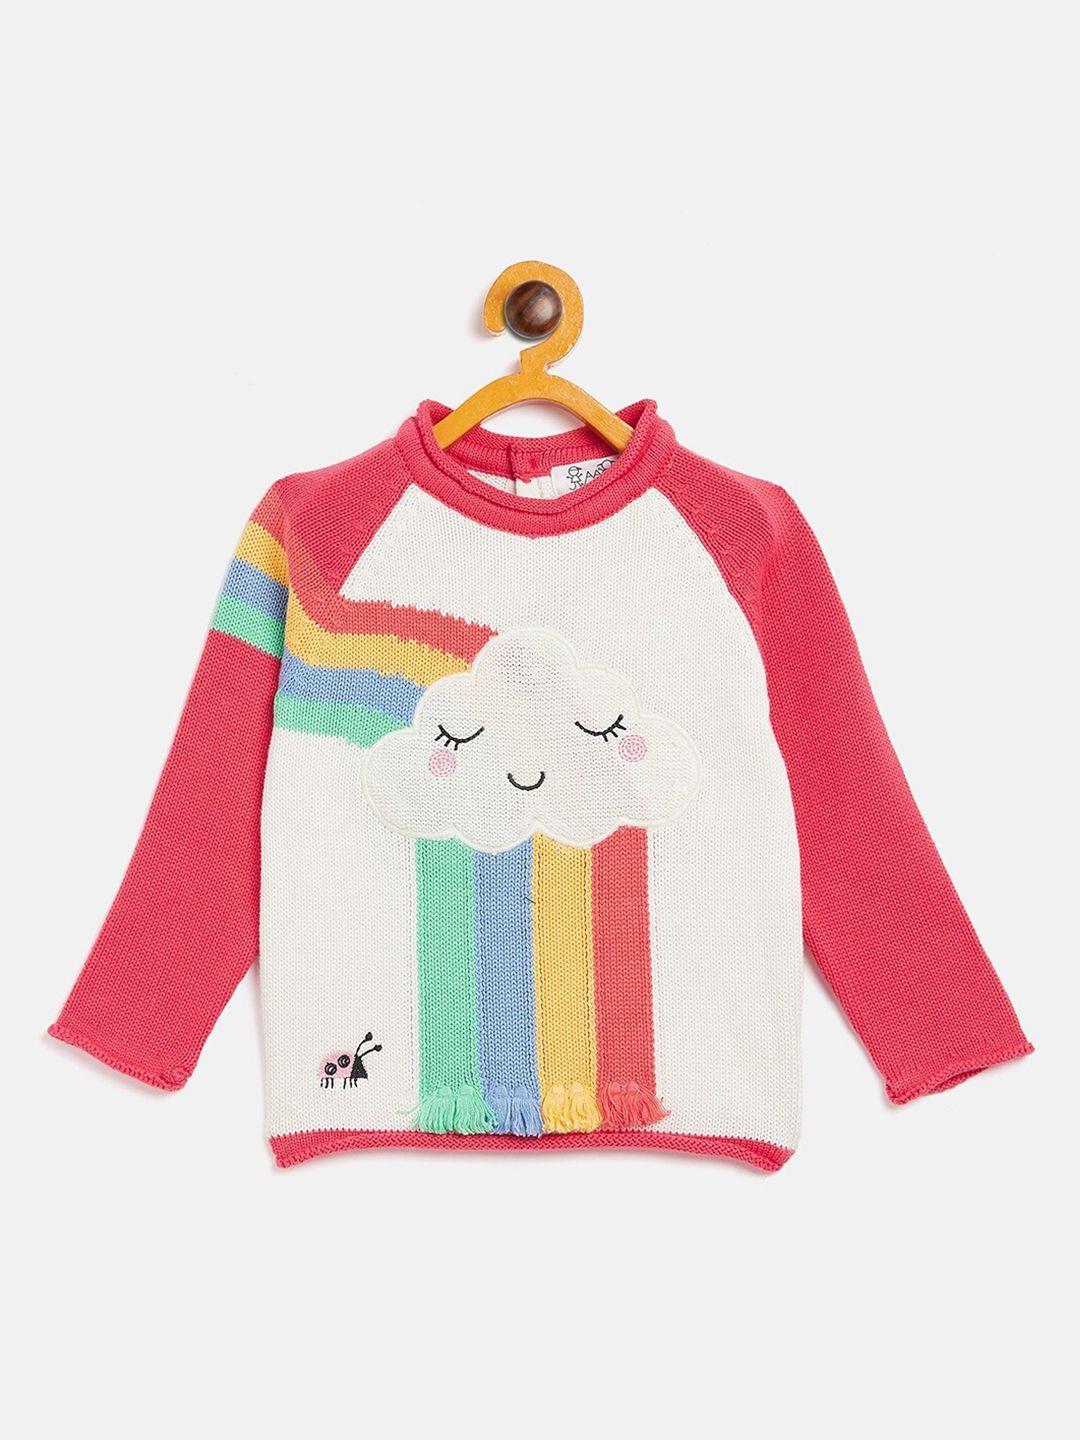 jwaaq unisex kids pink & white printed pullover